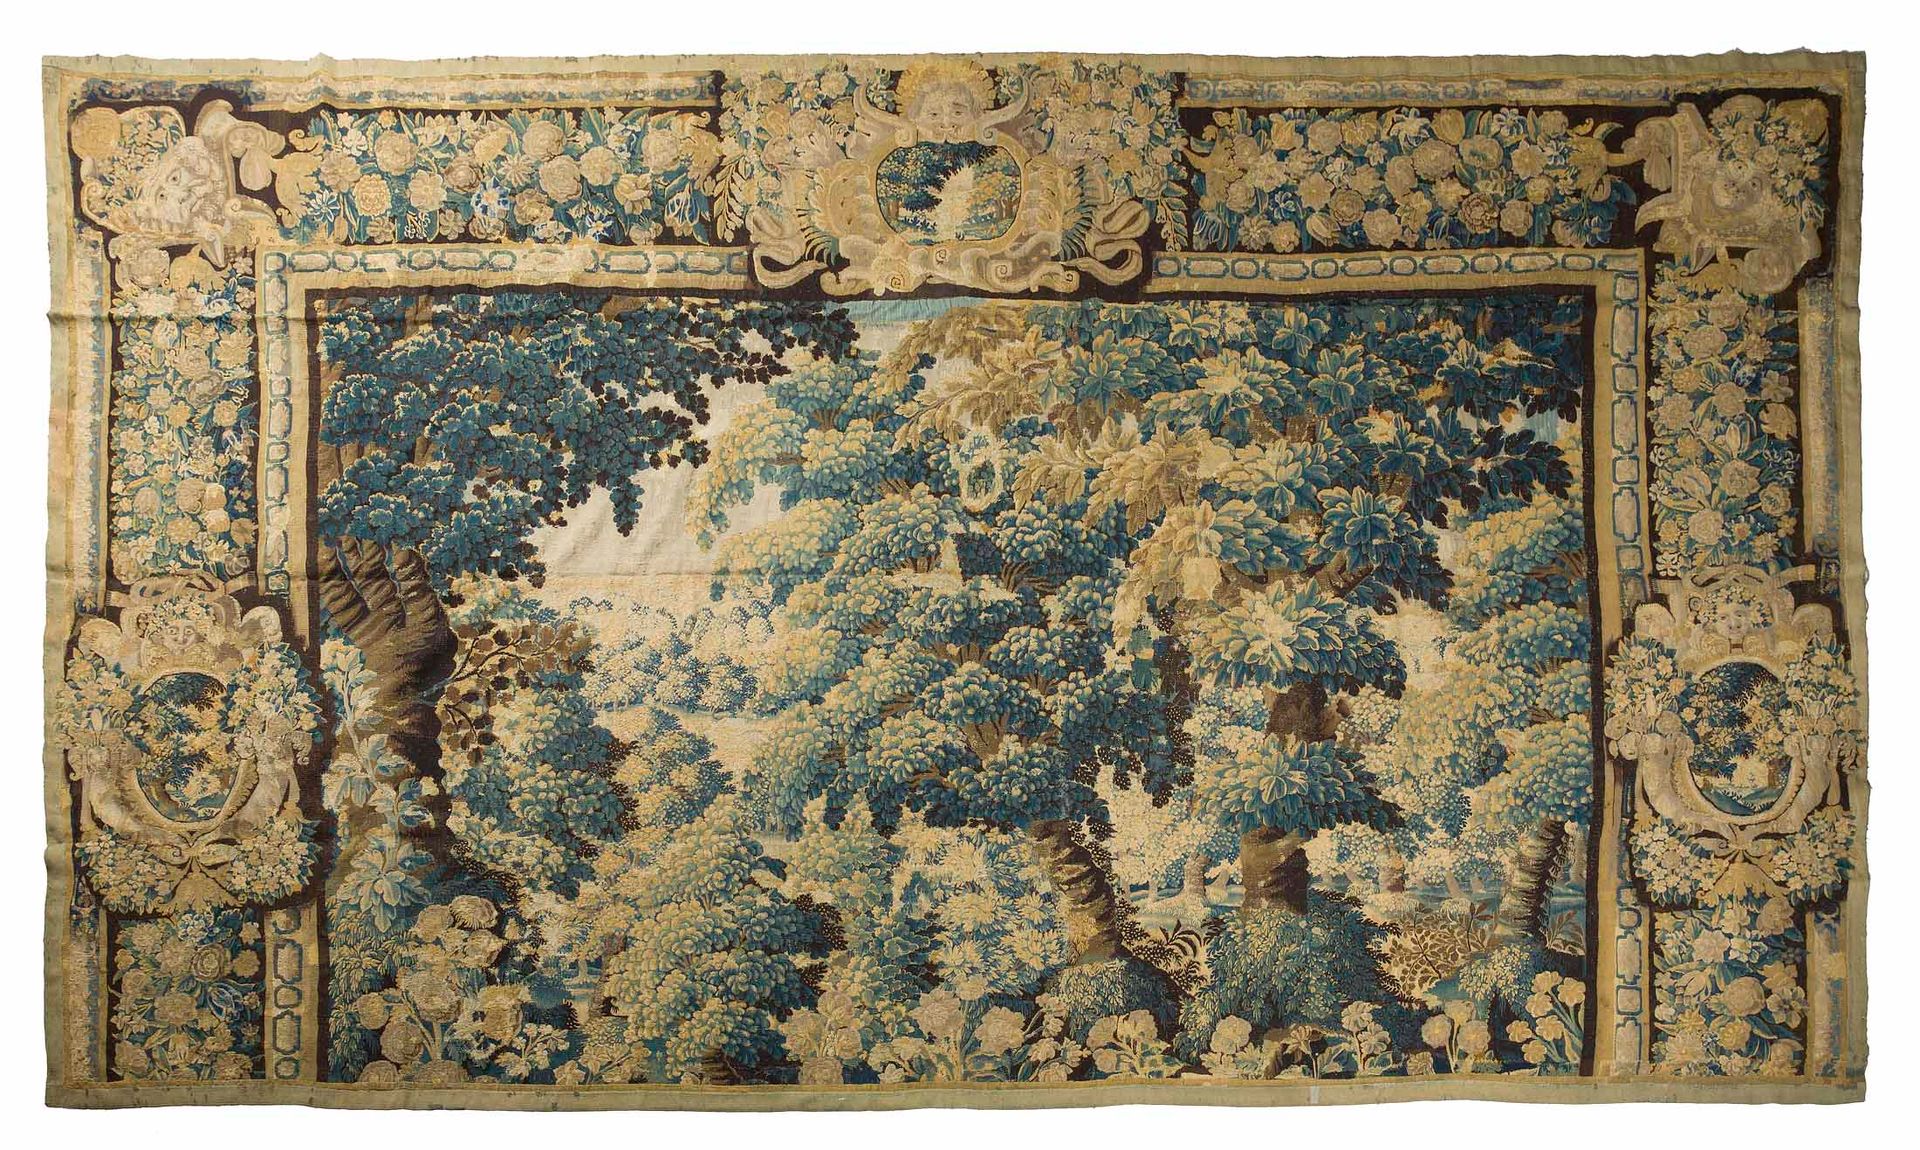 Null 布鲁日的挂毯，17世纪

技术特点 : 羊毛和丝绸

尺寸：高度：257厘米；宽度：440厘米

如果说在前景中我们可以看到开花的植物，那么这幅挂毯的&hellip;